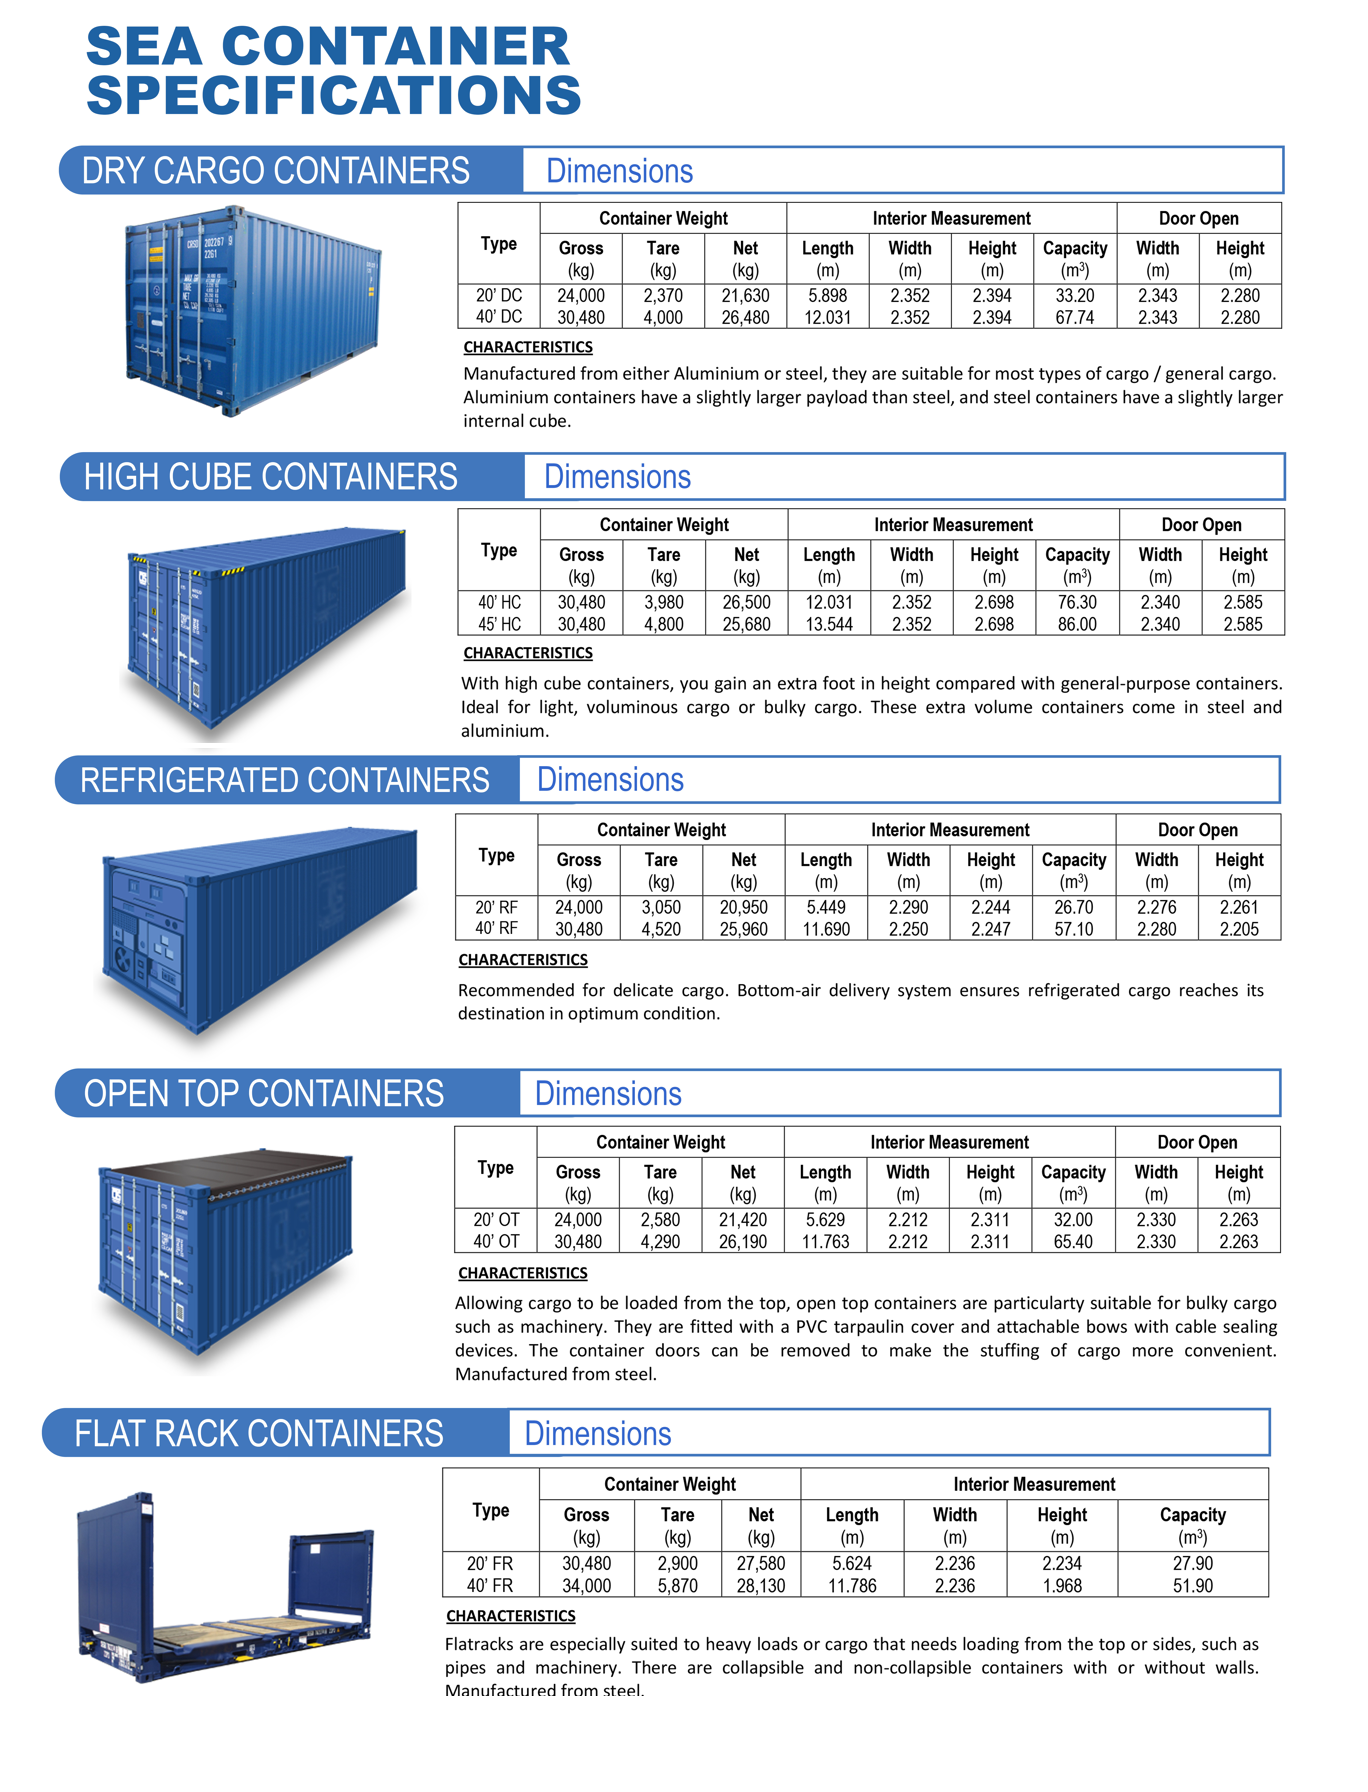 Контейнер 40фт High Cube габариты. 40 Футовый High Cube контейнер DC ISO. Габариты 40 фут контейнера High Cube. Габариты контейнера ИСО-20.